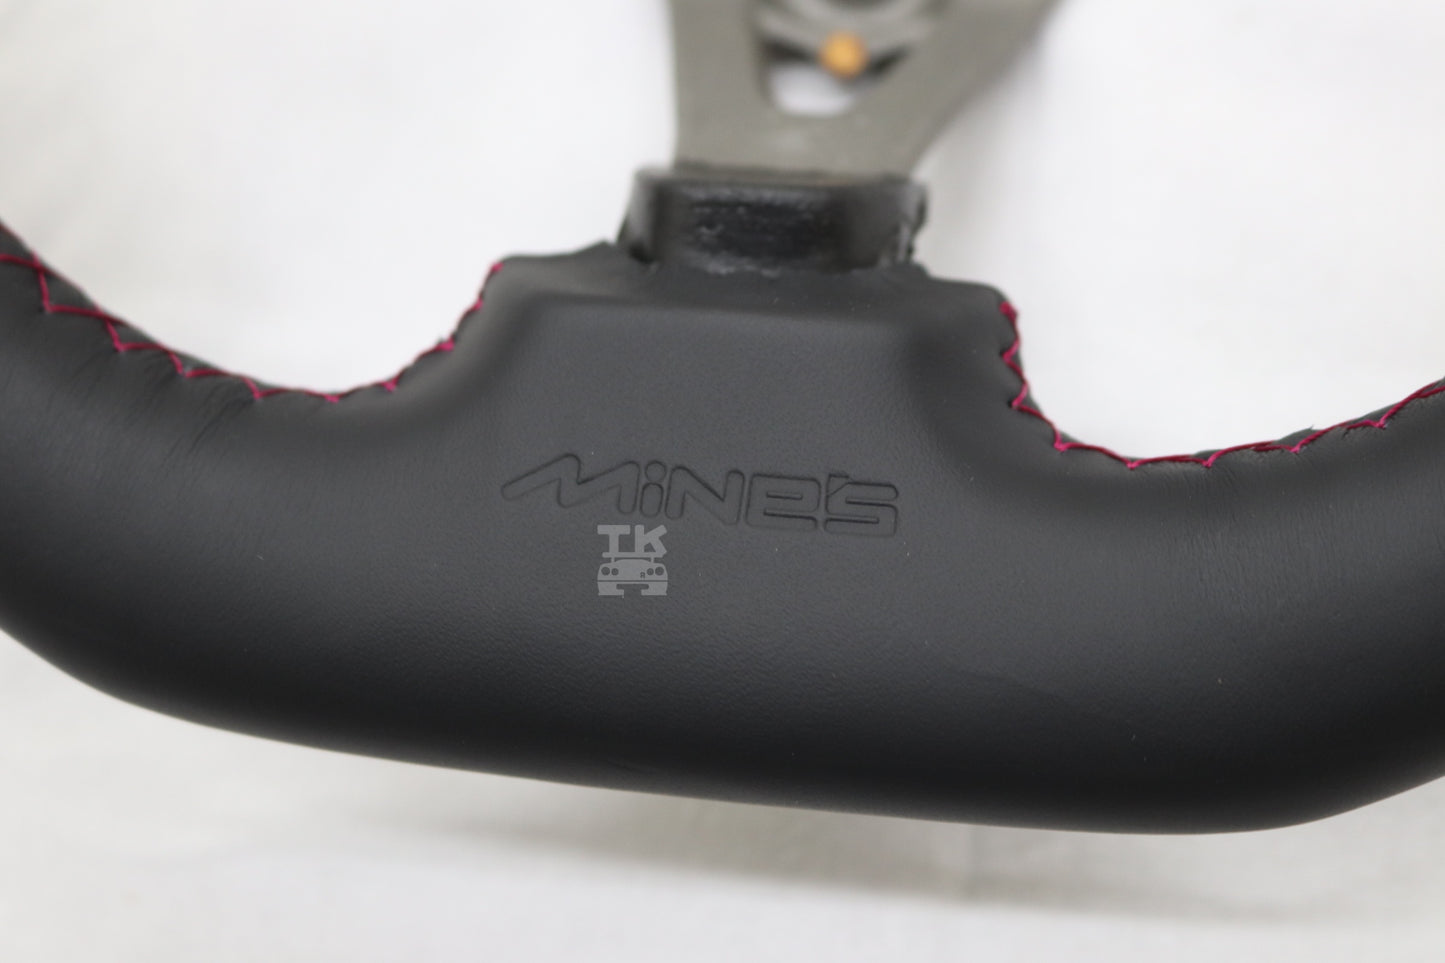 MINE'S Leather D-Shape Steering Wheel Red Stitch - BNR34 #875111001